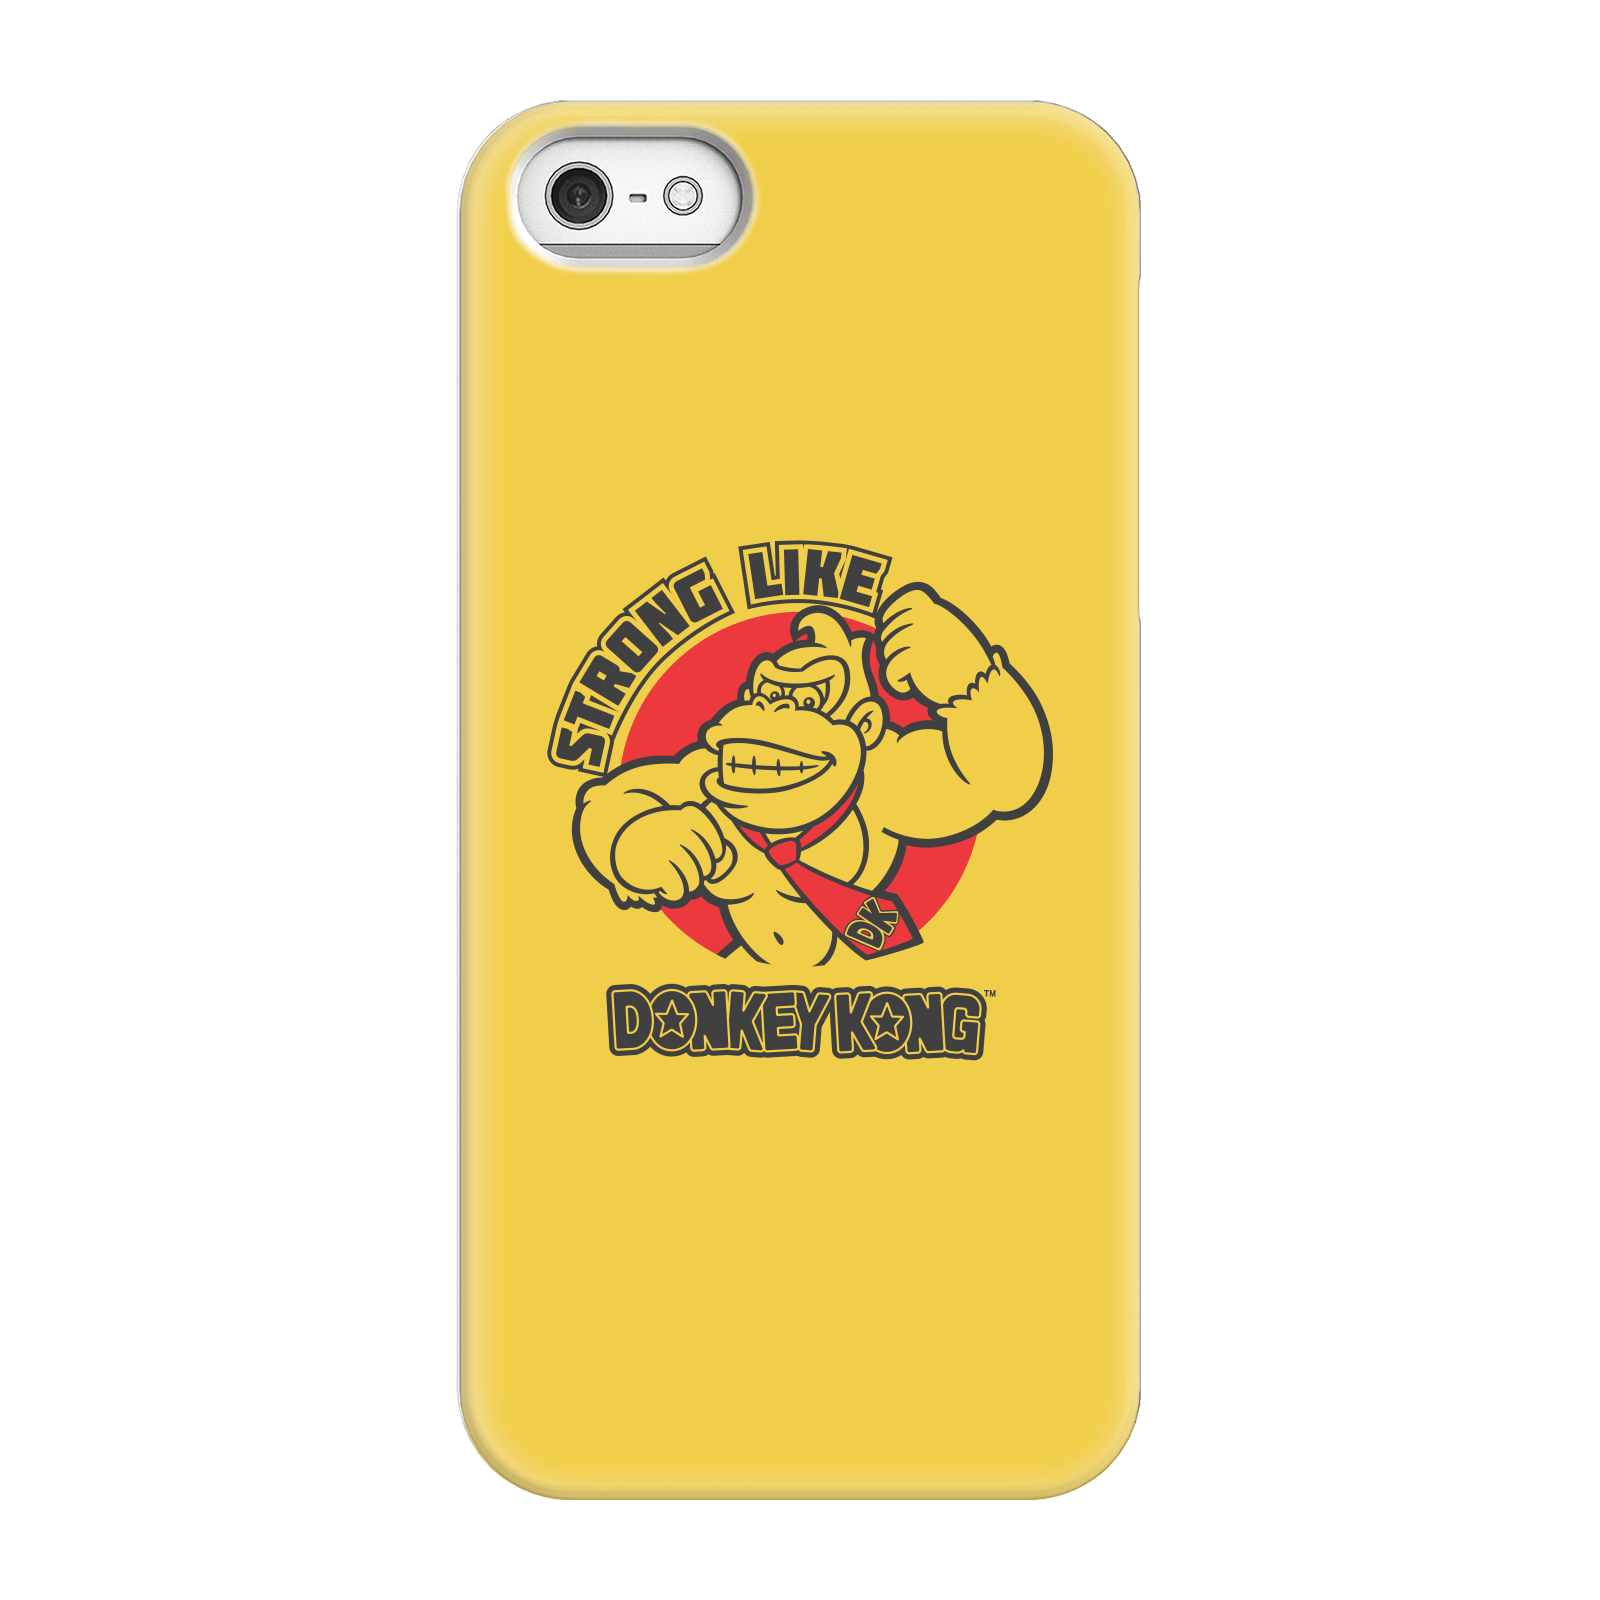 Nintendo Donkey Kong Strong Like Donkey Kong Phone Case - iPhone 5/5s - Snap Case - Gloss